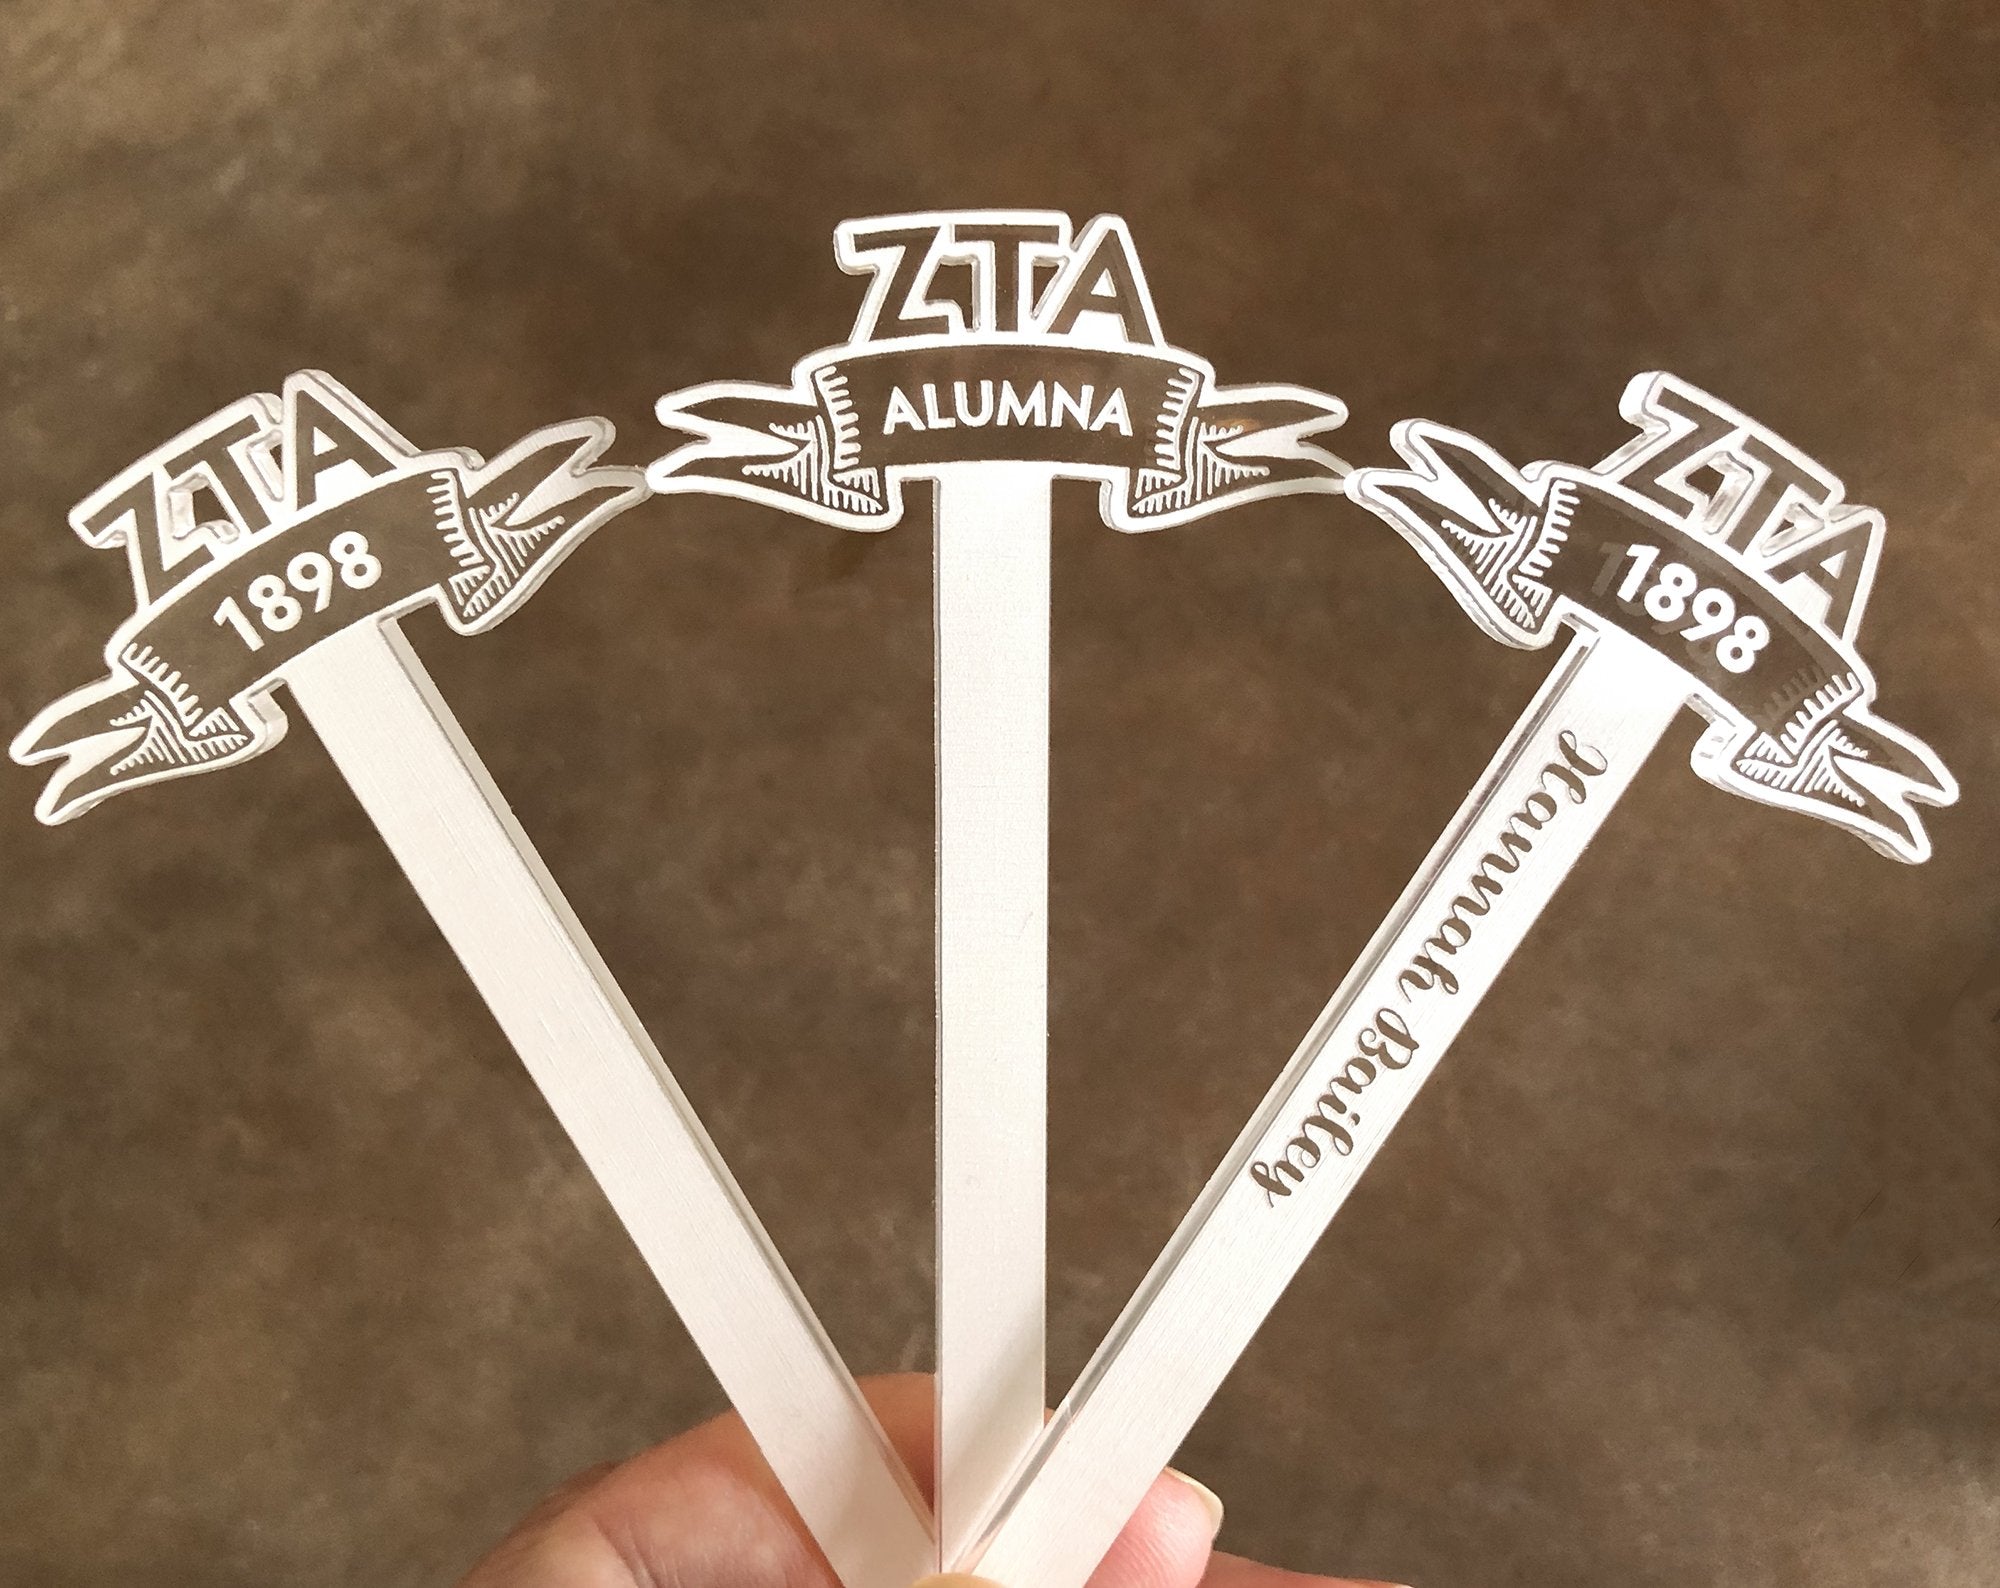 Zeta Tau Alpha Swizzle Sticks | Brit and Bee